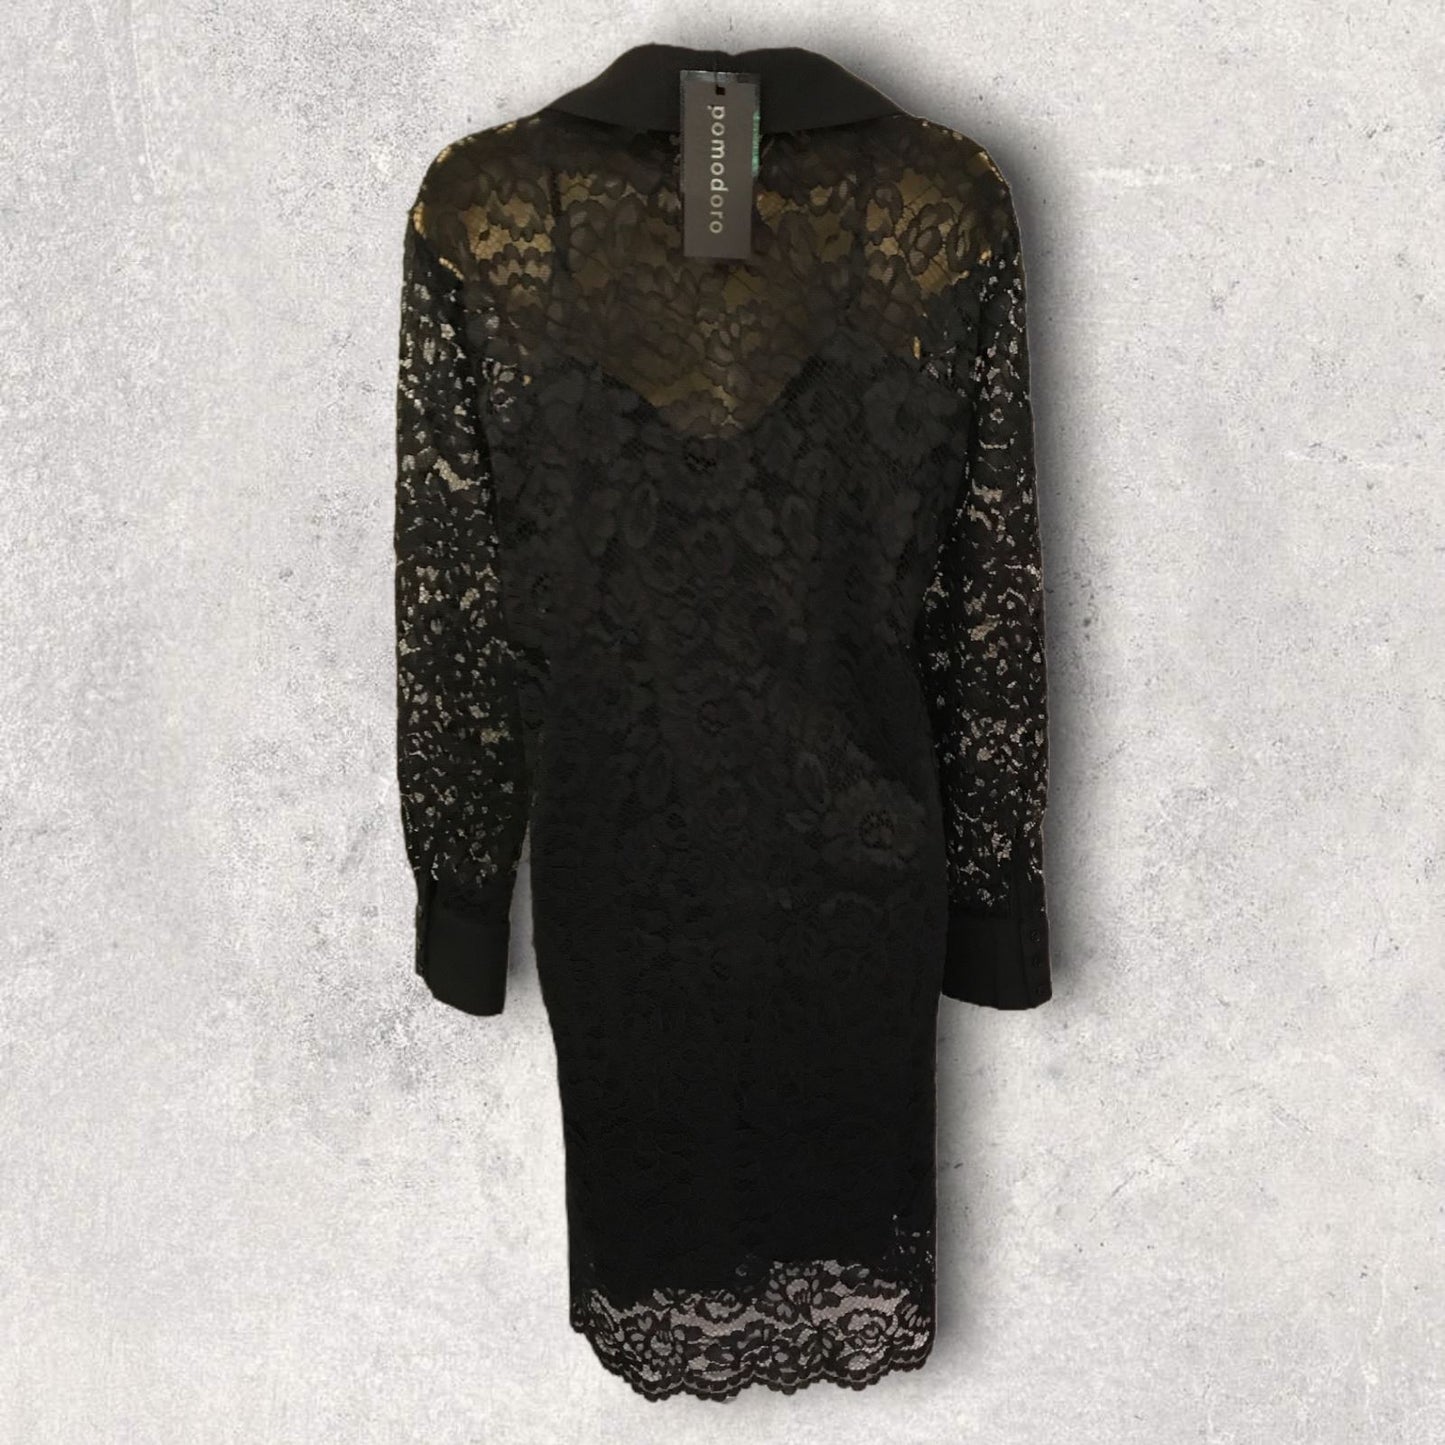 Pomodoro Black Lace Long Sleeved Shirt Dress UK 14 US 10 EU 42 Timeless Fashions